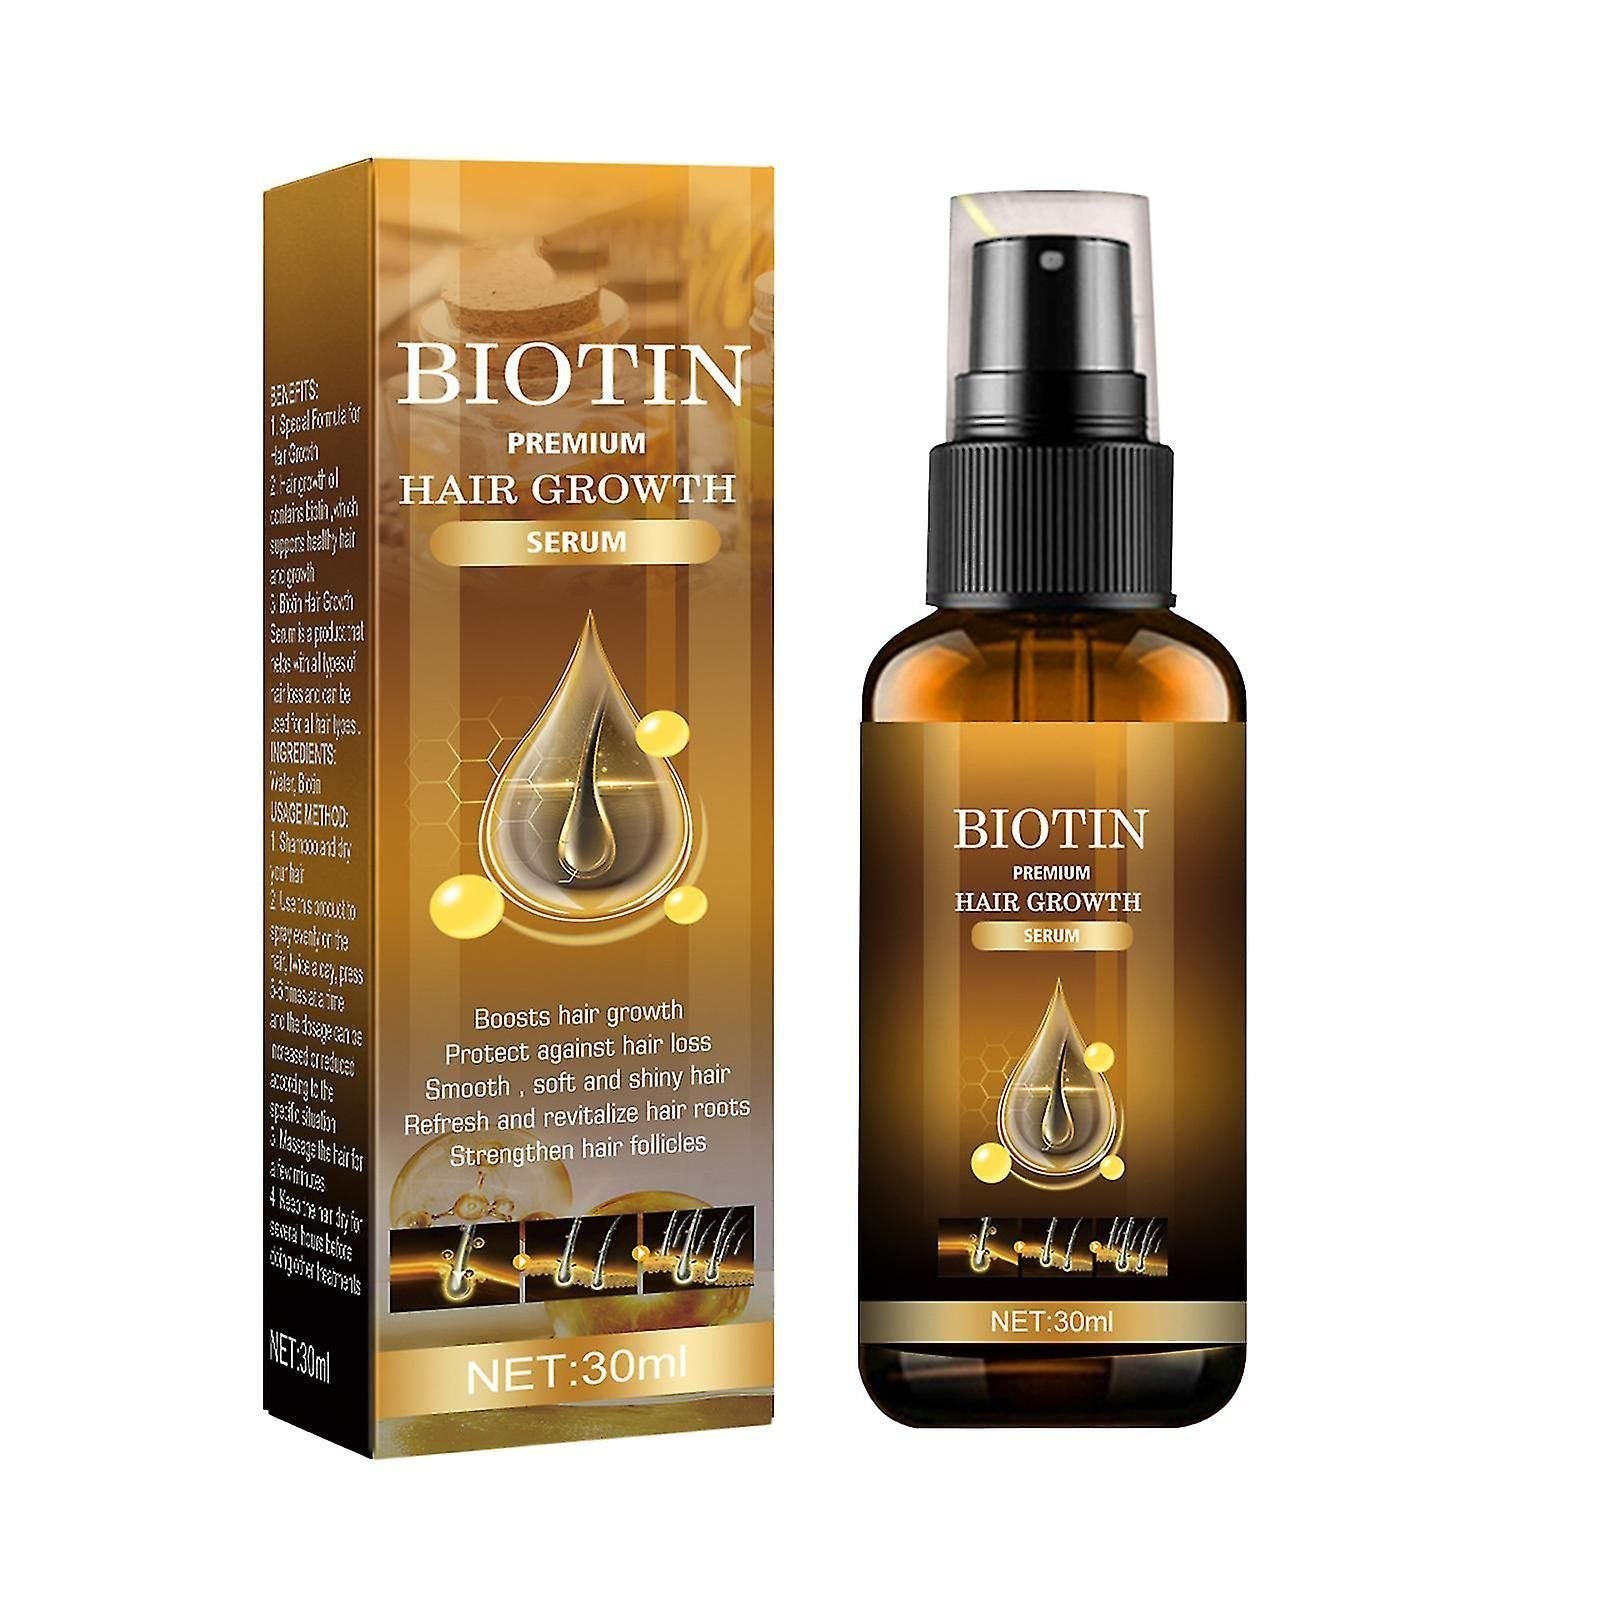 Biotin Hair Growth Spray, Hair Regrowth Spray, Biotin Hair Growth Serum, Biotin Thickening Herbal Serum, Fast Growing Hair Care Essential Oils (2PCS) - Deal IND.